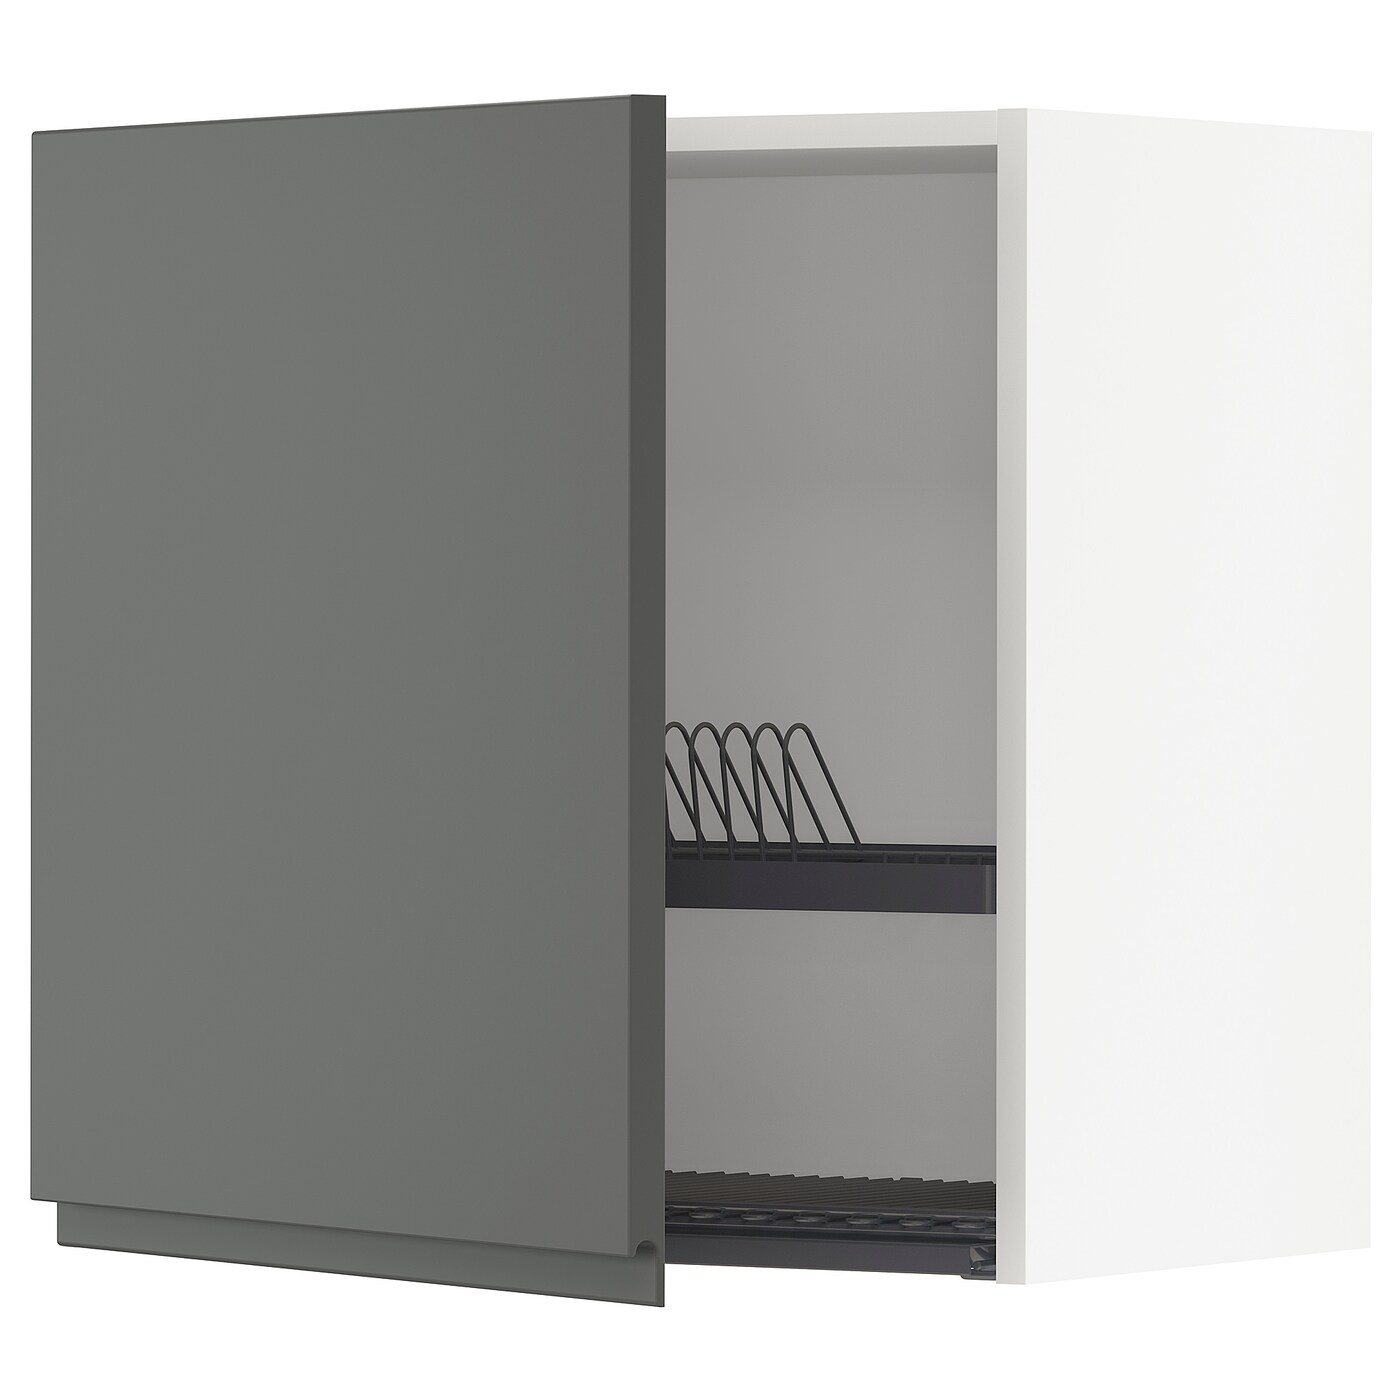 Навесной шкаф с сушилкой - METOD IKEA/ МЕТОД ИКЕА, 60х60 см, белый/серый